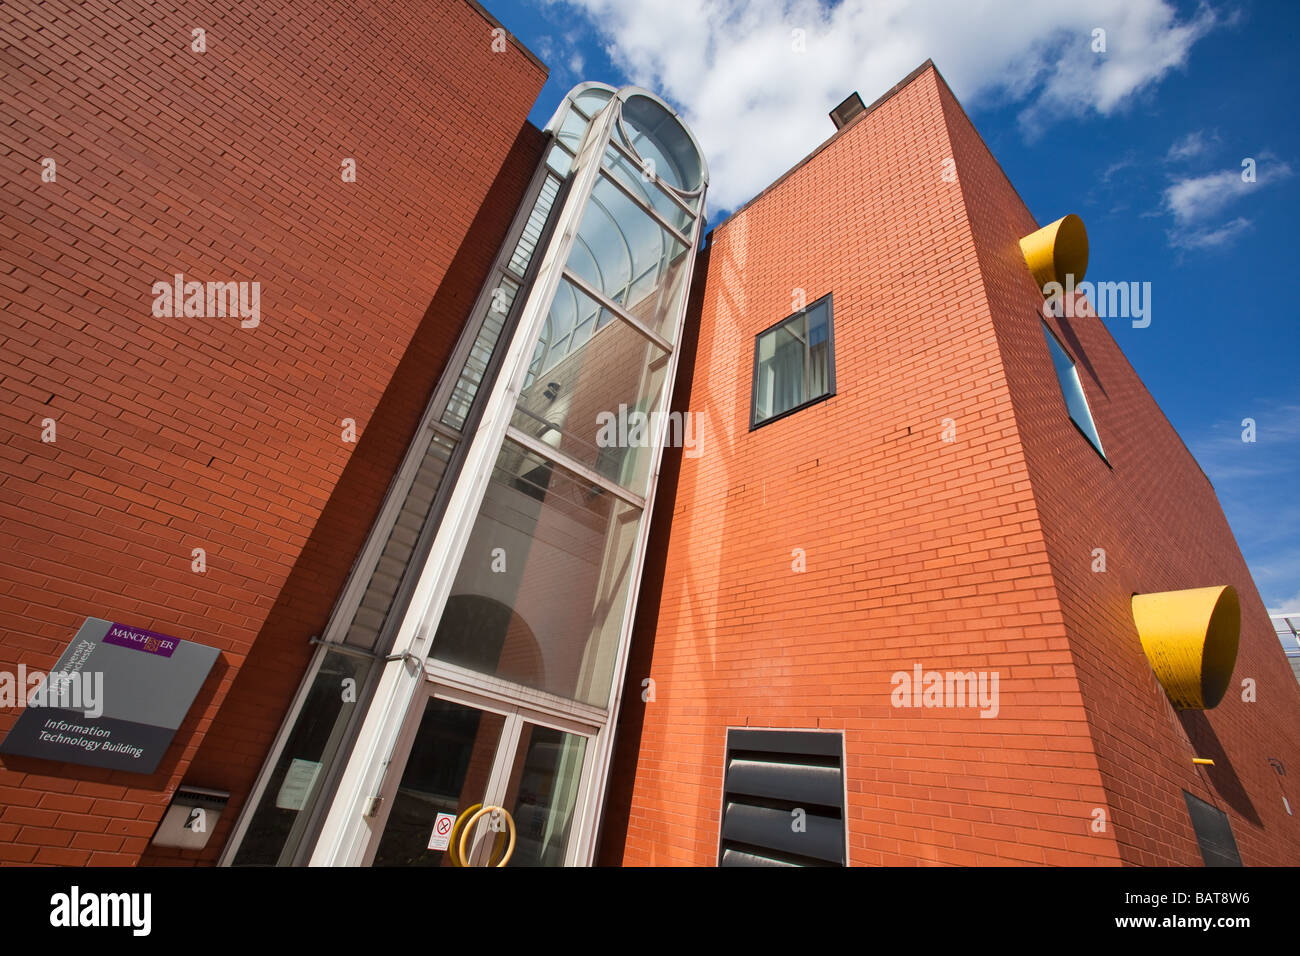 Information Technology Building, The University of Manchester, UK Stock Photo